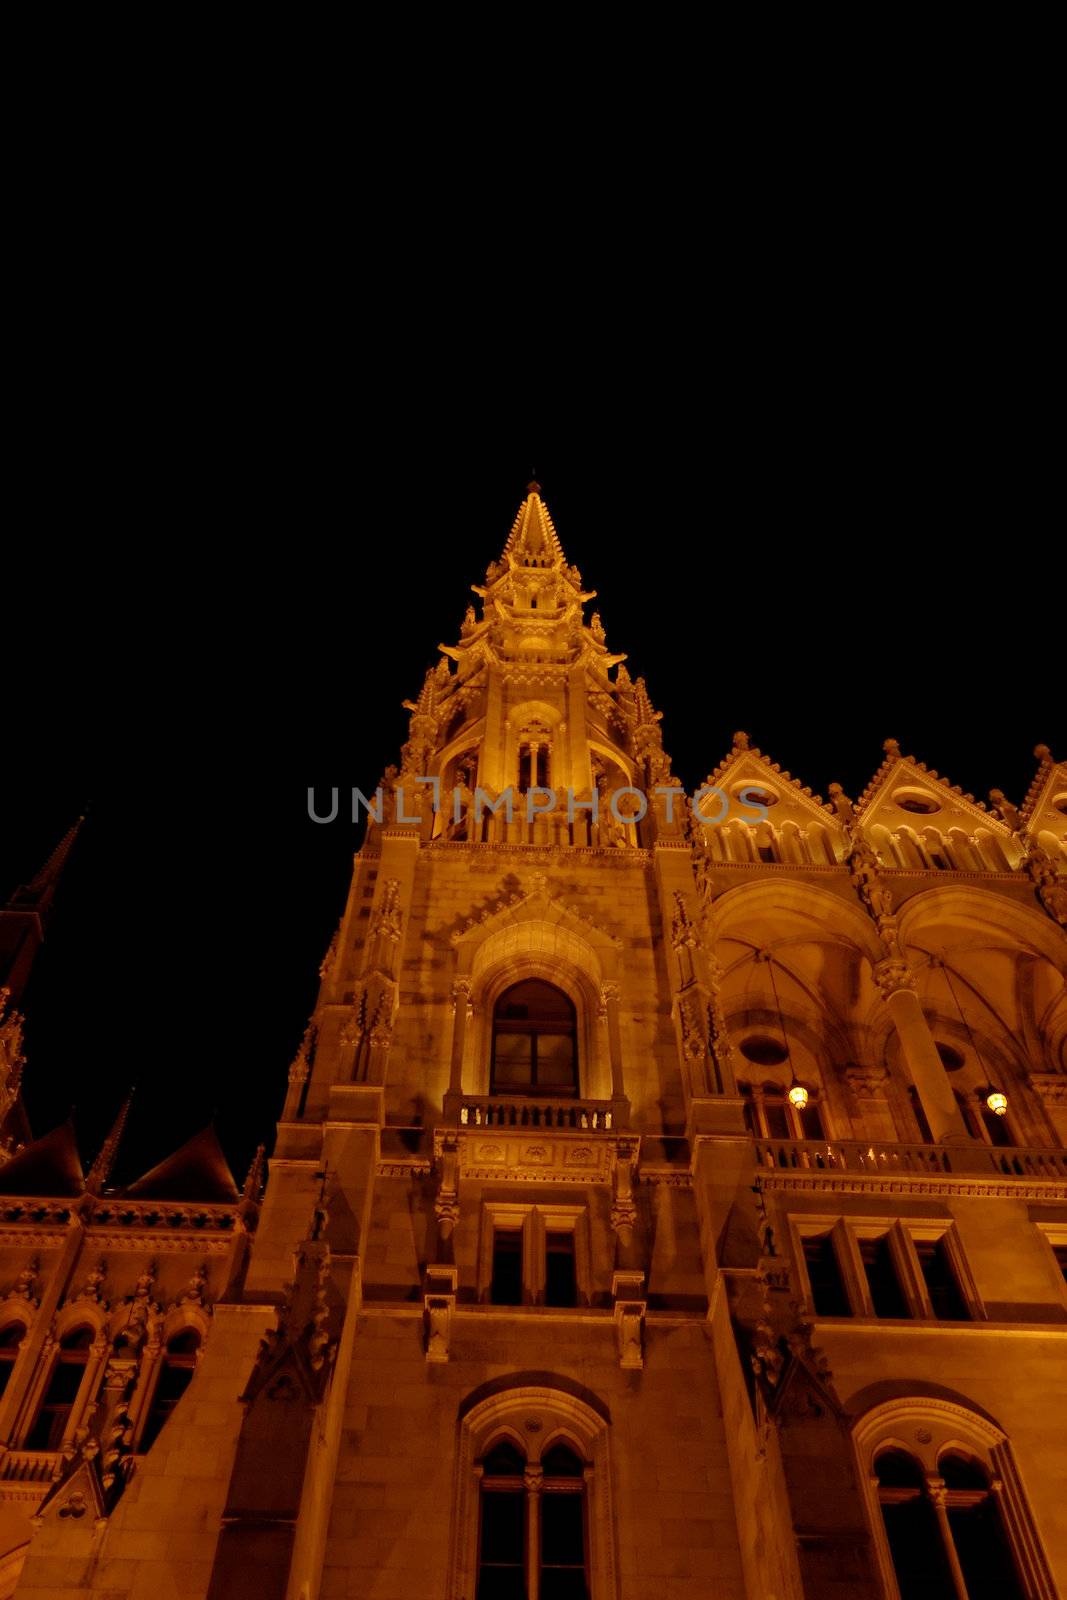 Budapest Parliament building (detail) by NagyDodo